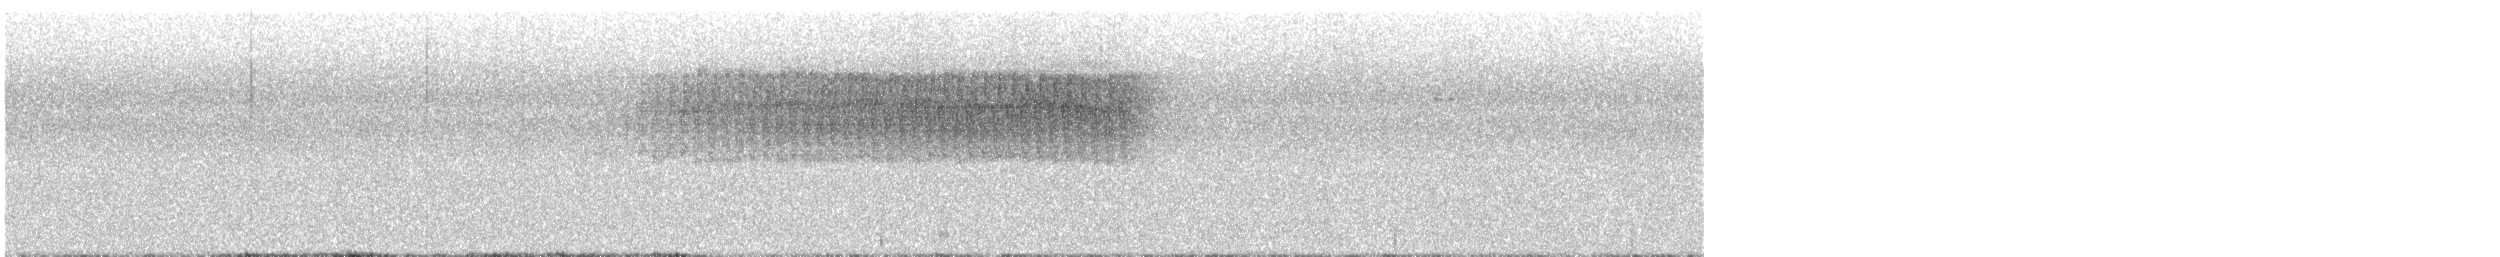 Paruline vermivore - ML453160101